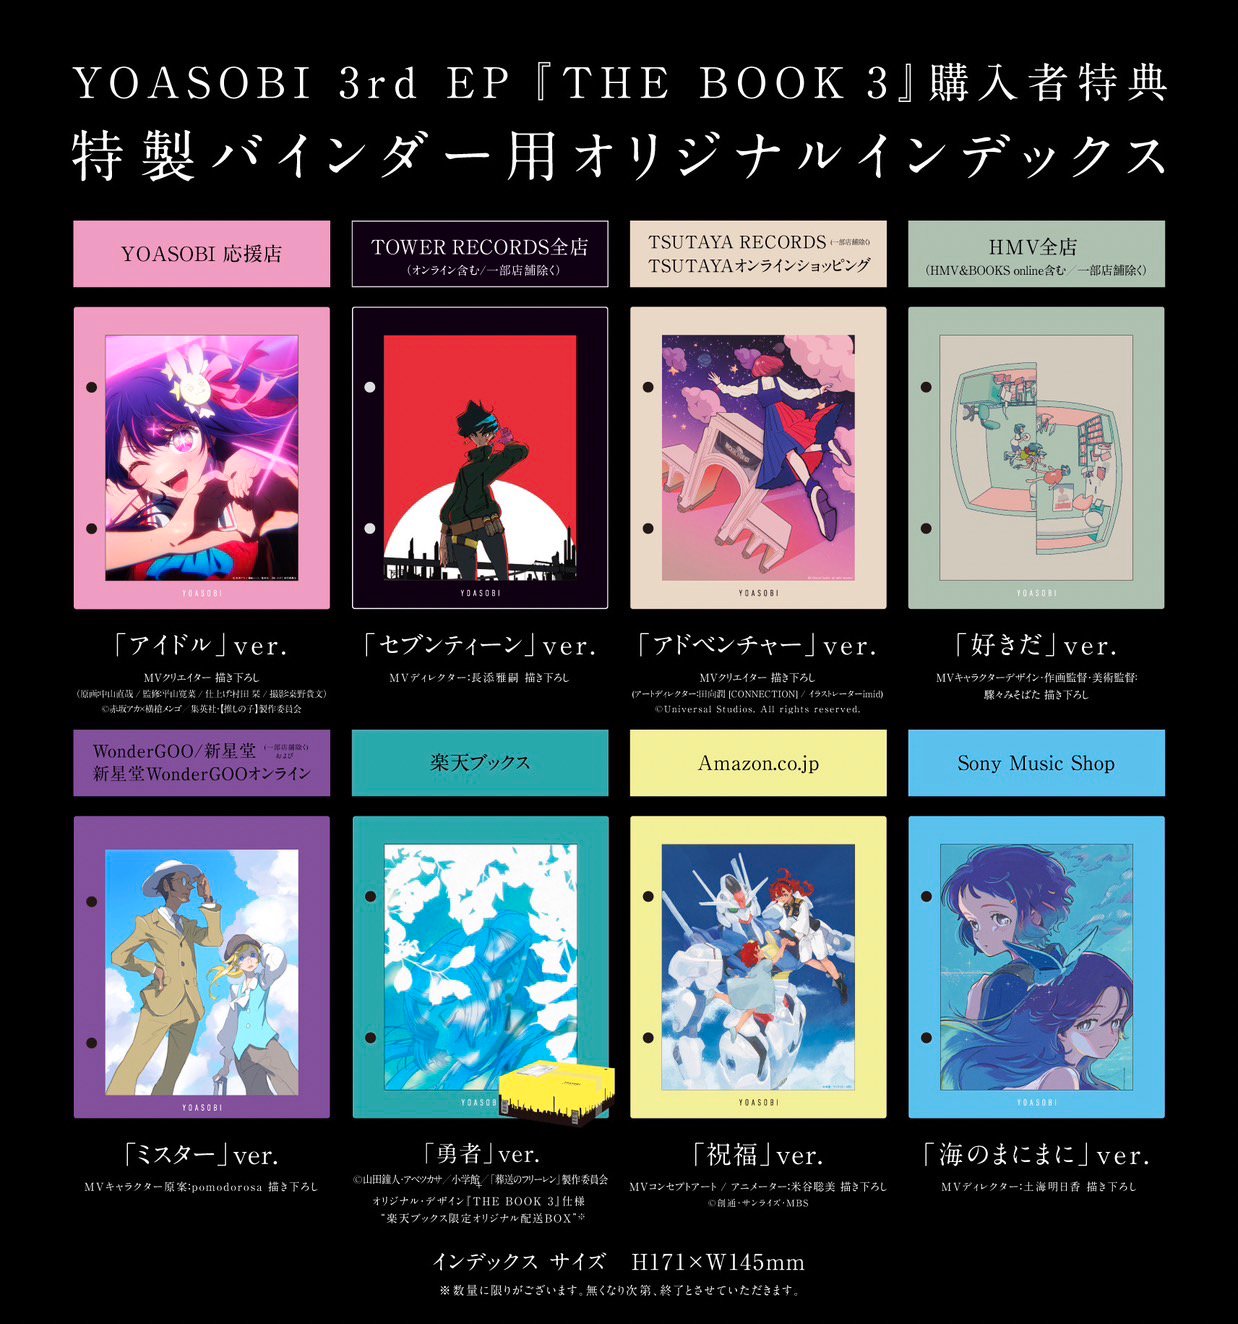 YOASOBI/THE BOOK〈CDなし〉特製バインダー